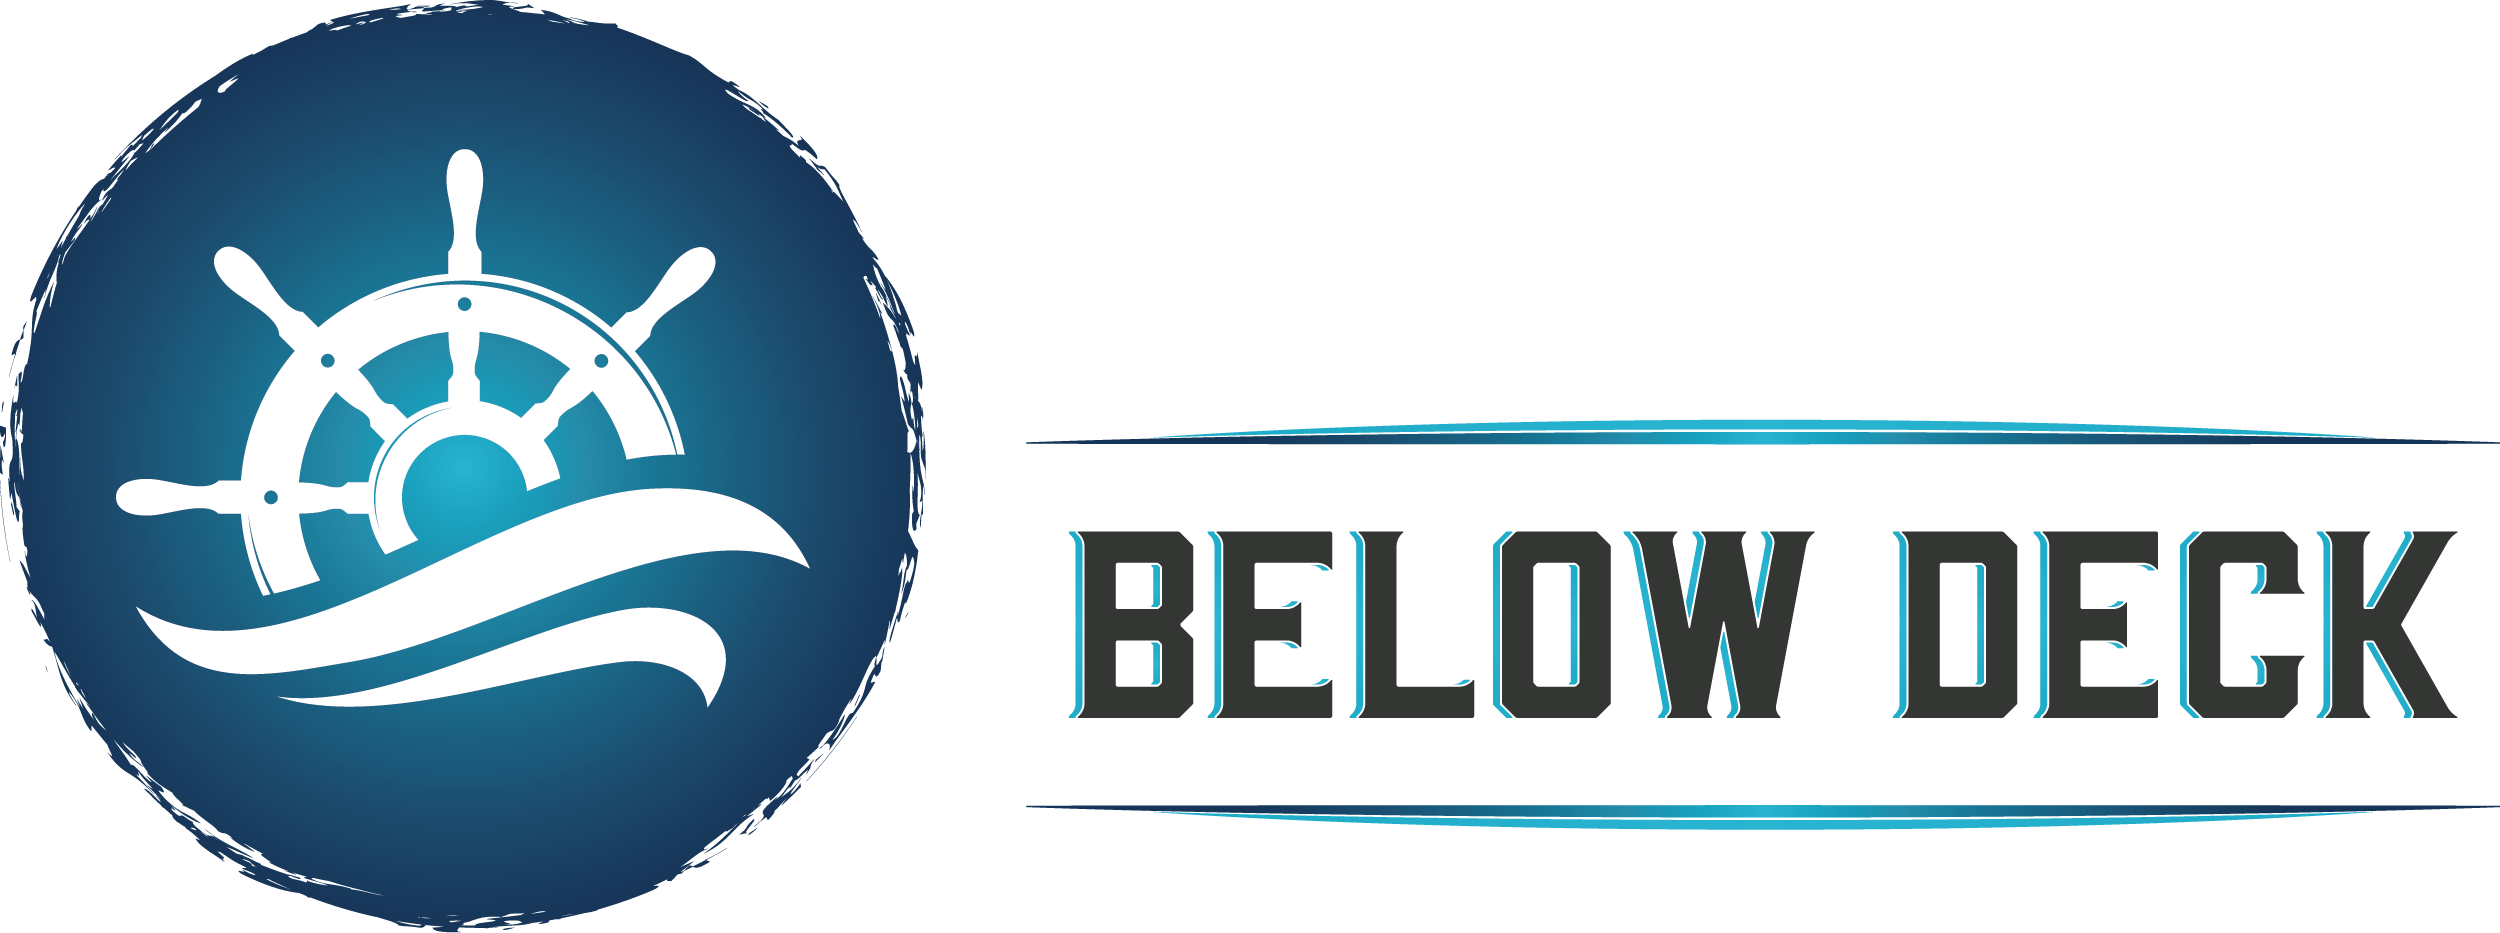 Below Deck Logo